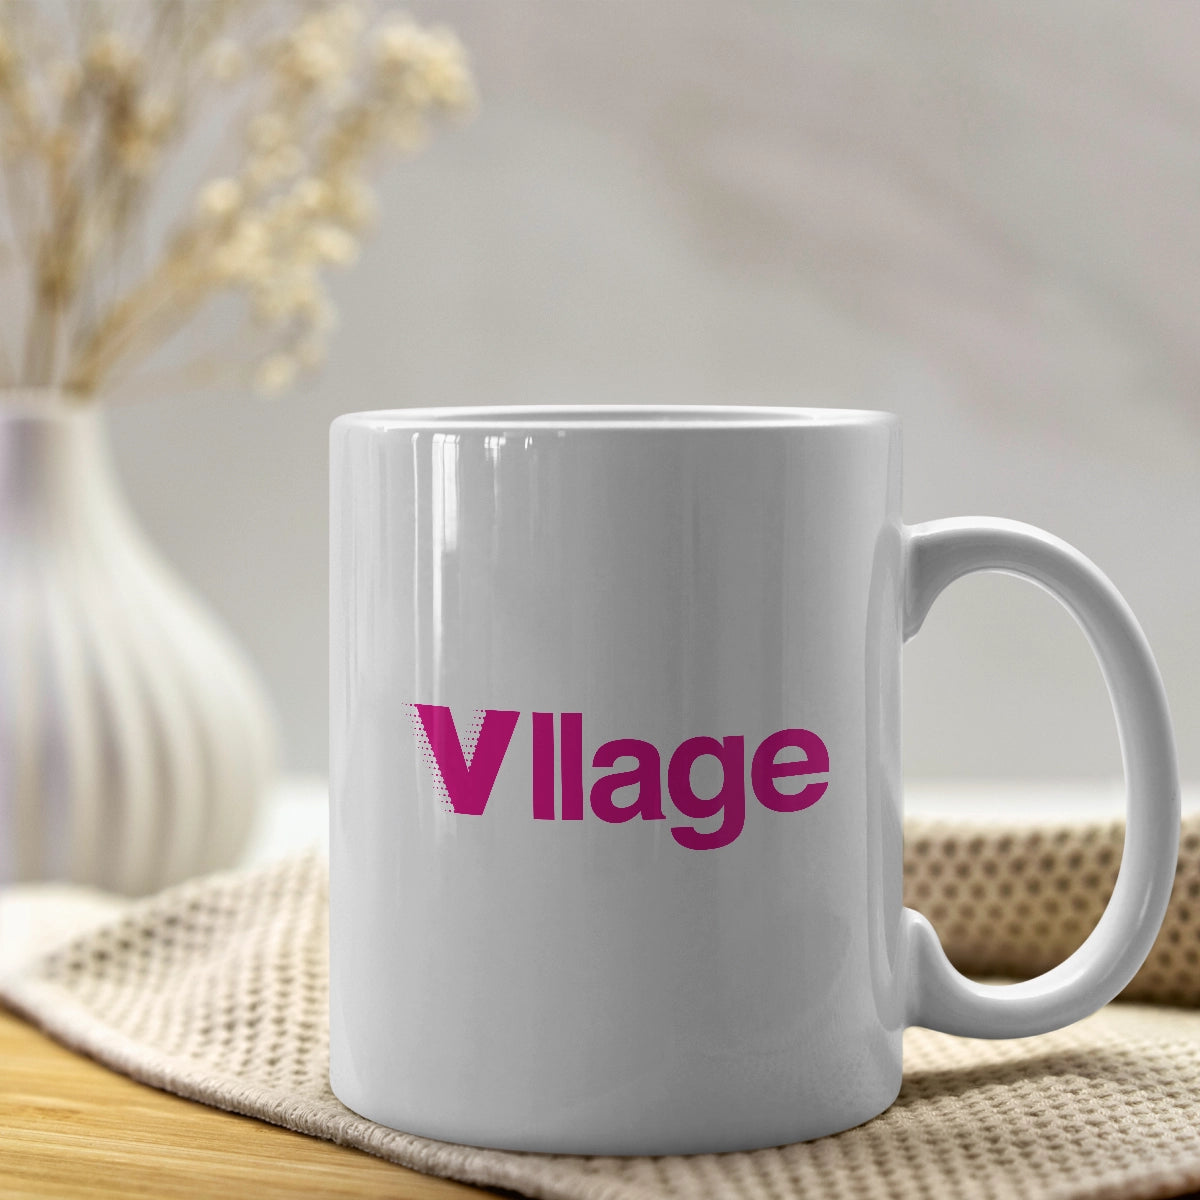 vllage.com